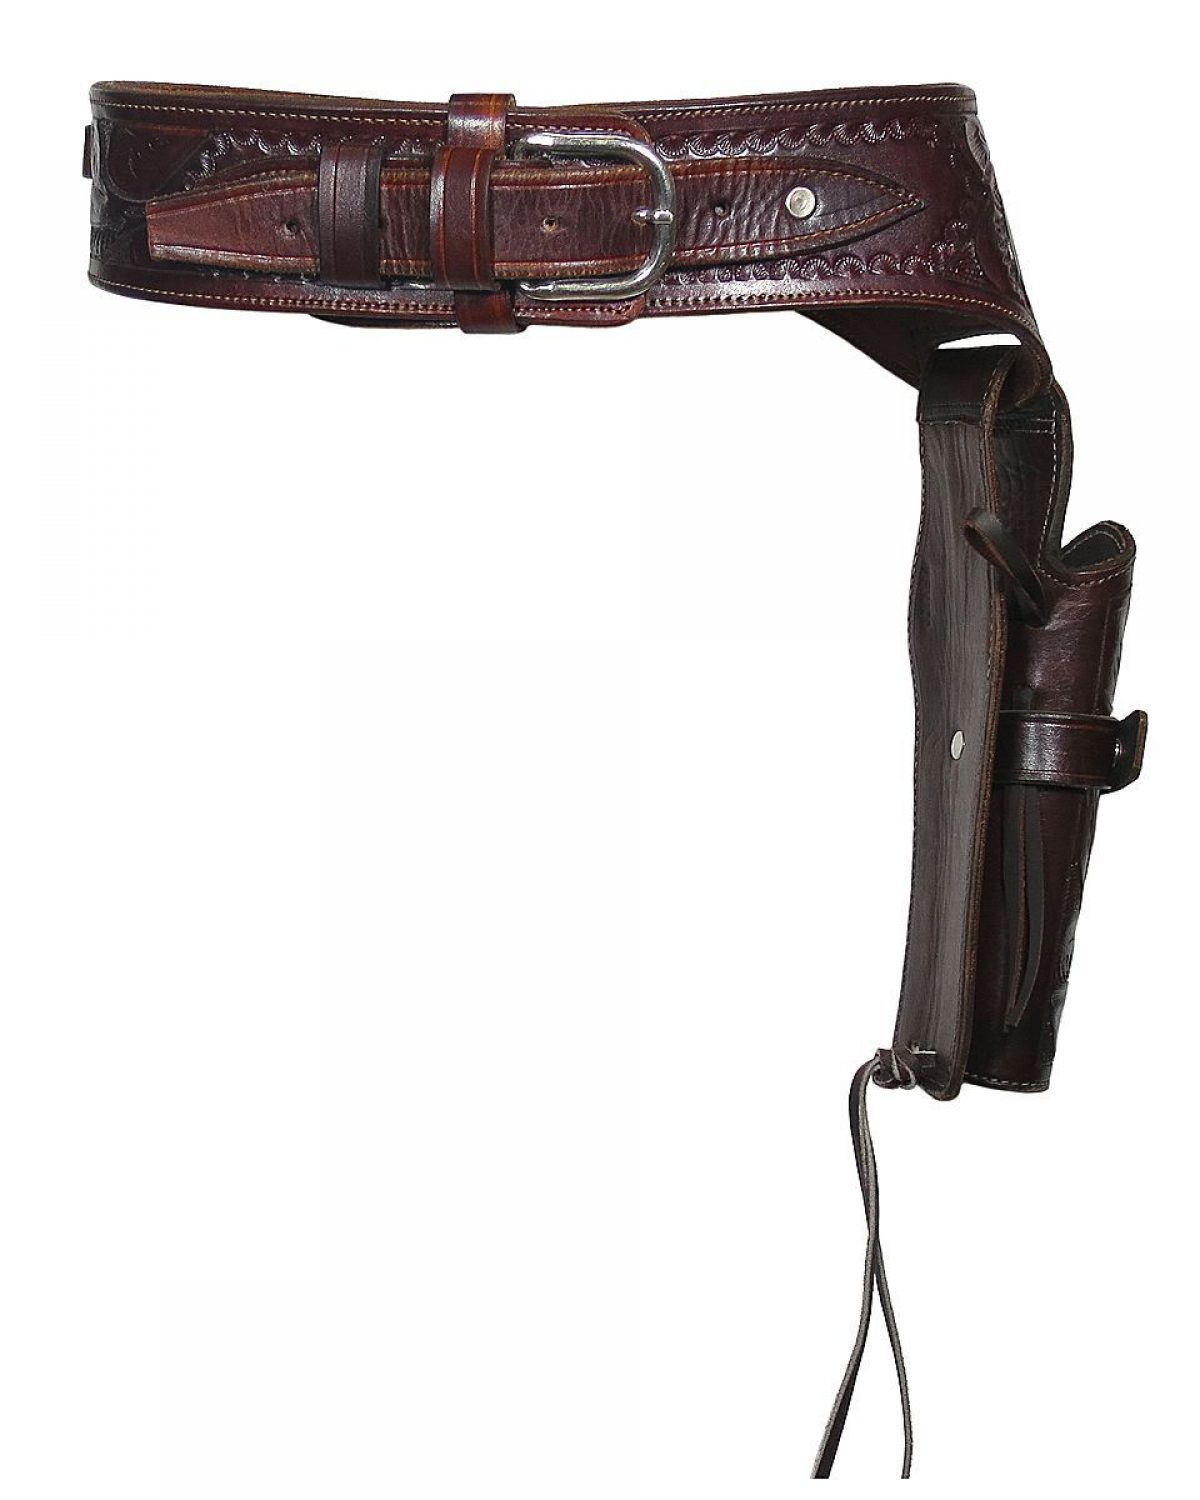 WESTERN COWBOY STYLE Cowhide Leather Plain Finish BELT For Gun Pistol HOLSTER 